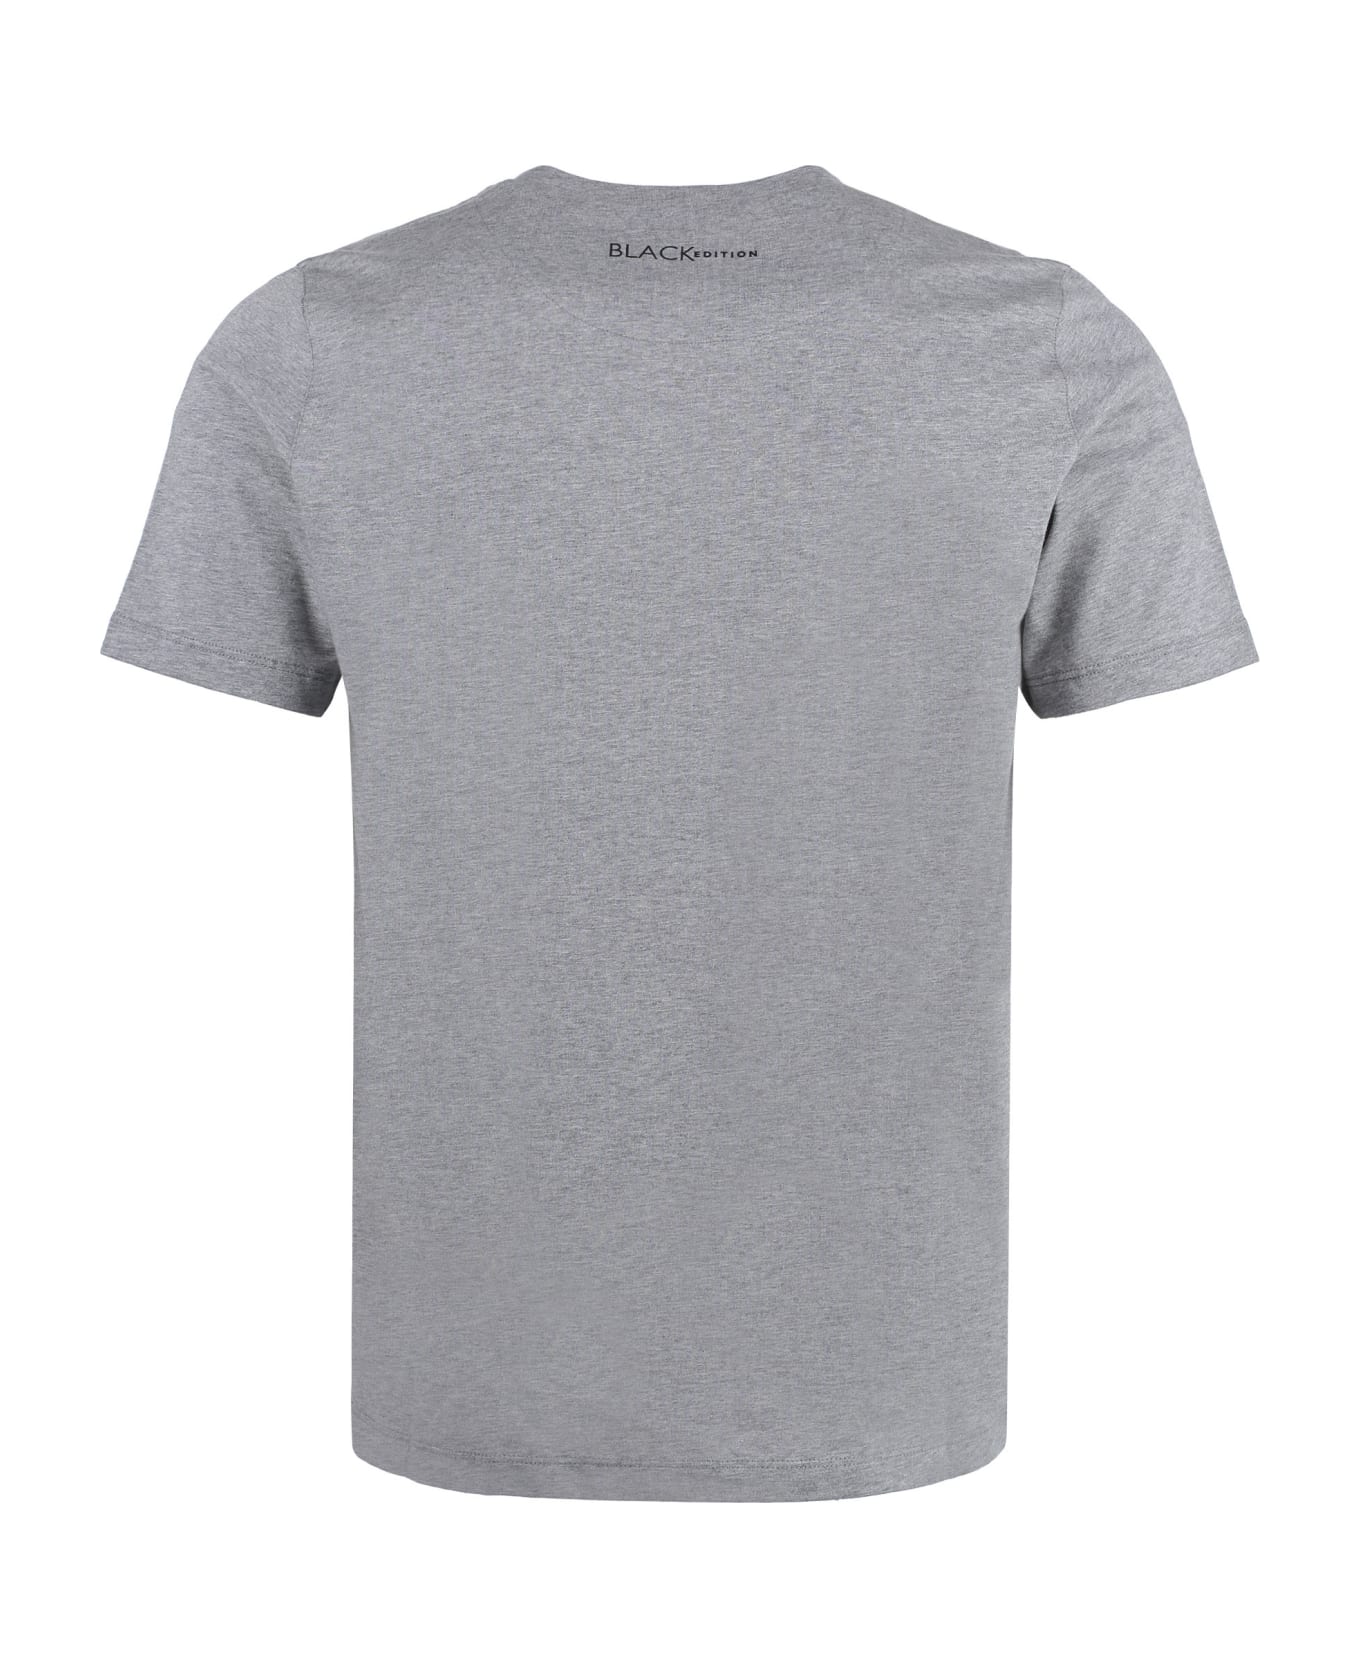 Canali Cotton T-shirt - grey